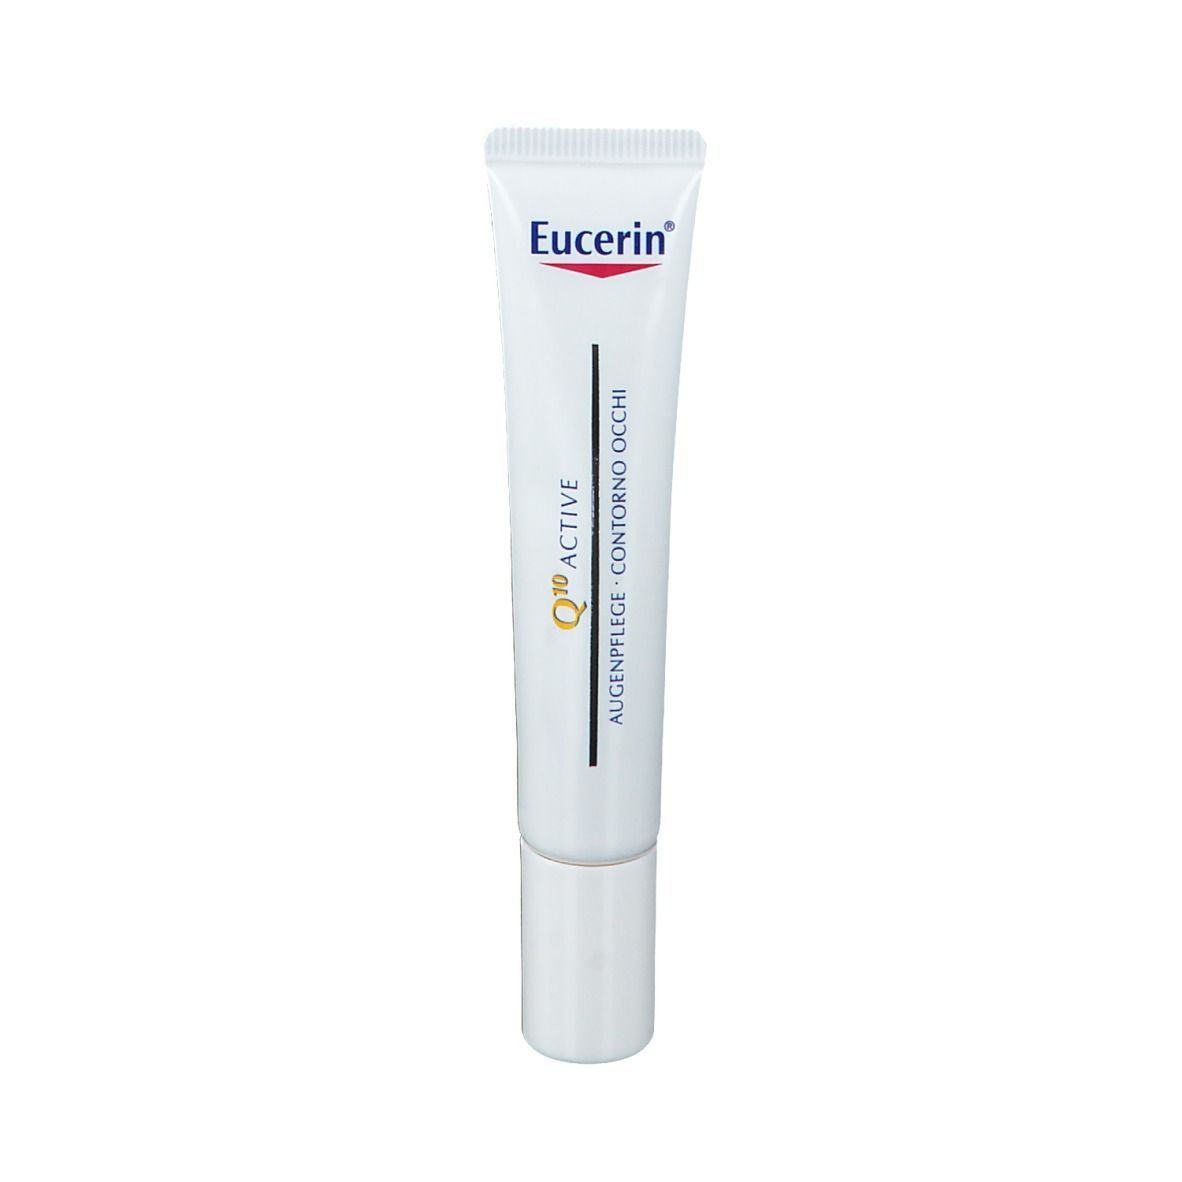 Eucerin® Q10 Active Augenpflege